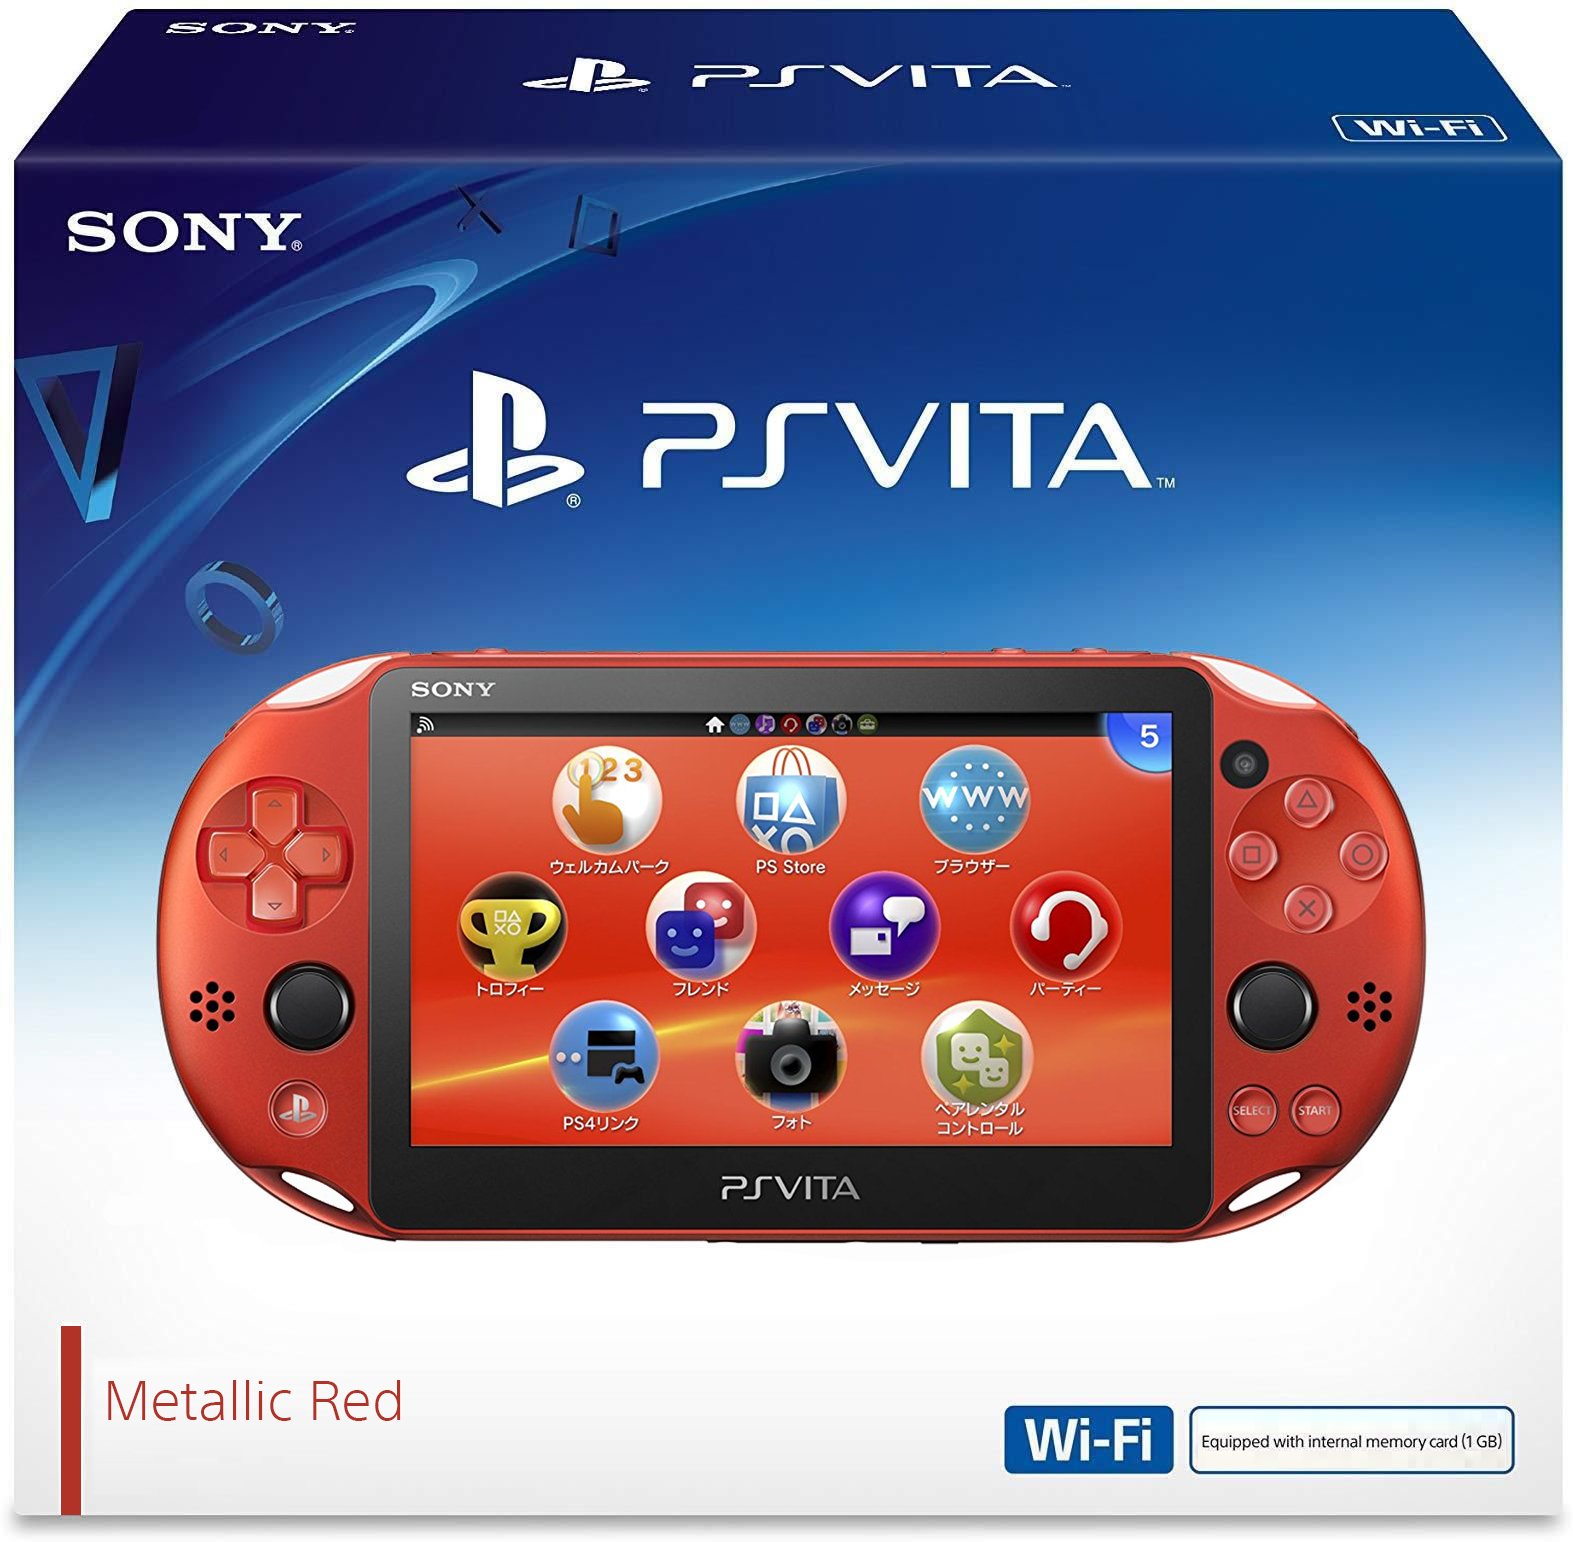 PS Vita Box (Metallic Red) by TNVGAMING on DeviantArt